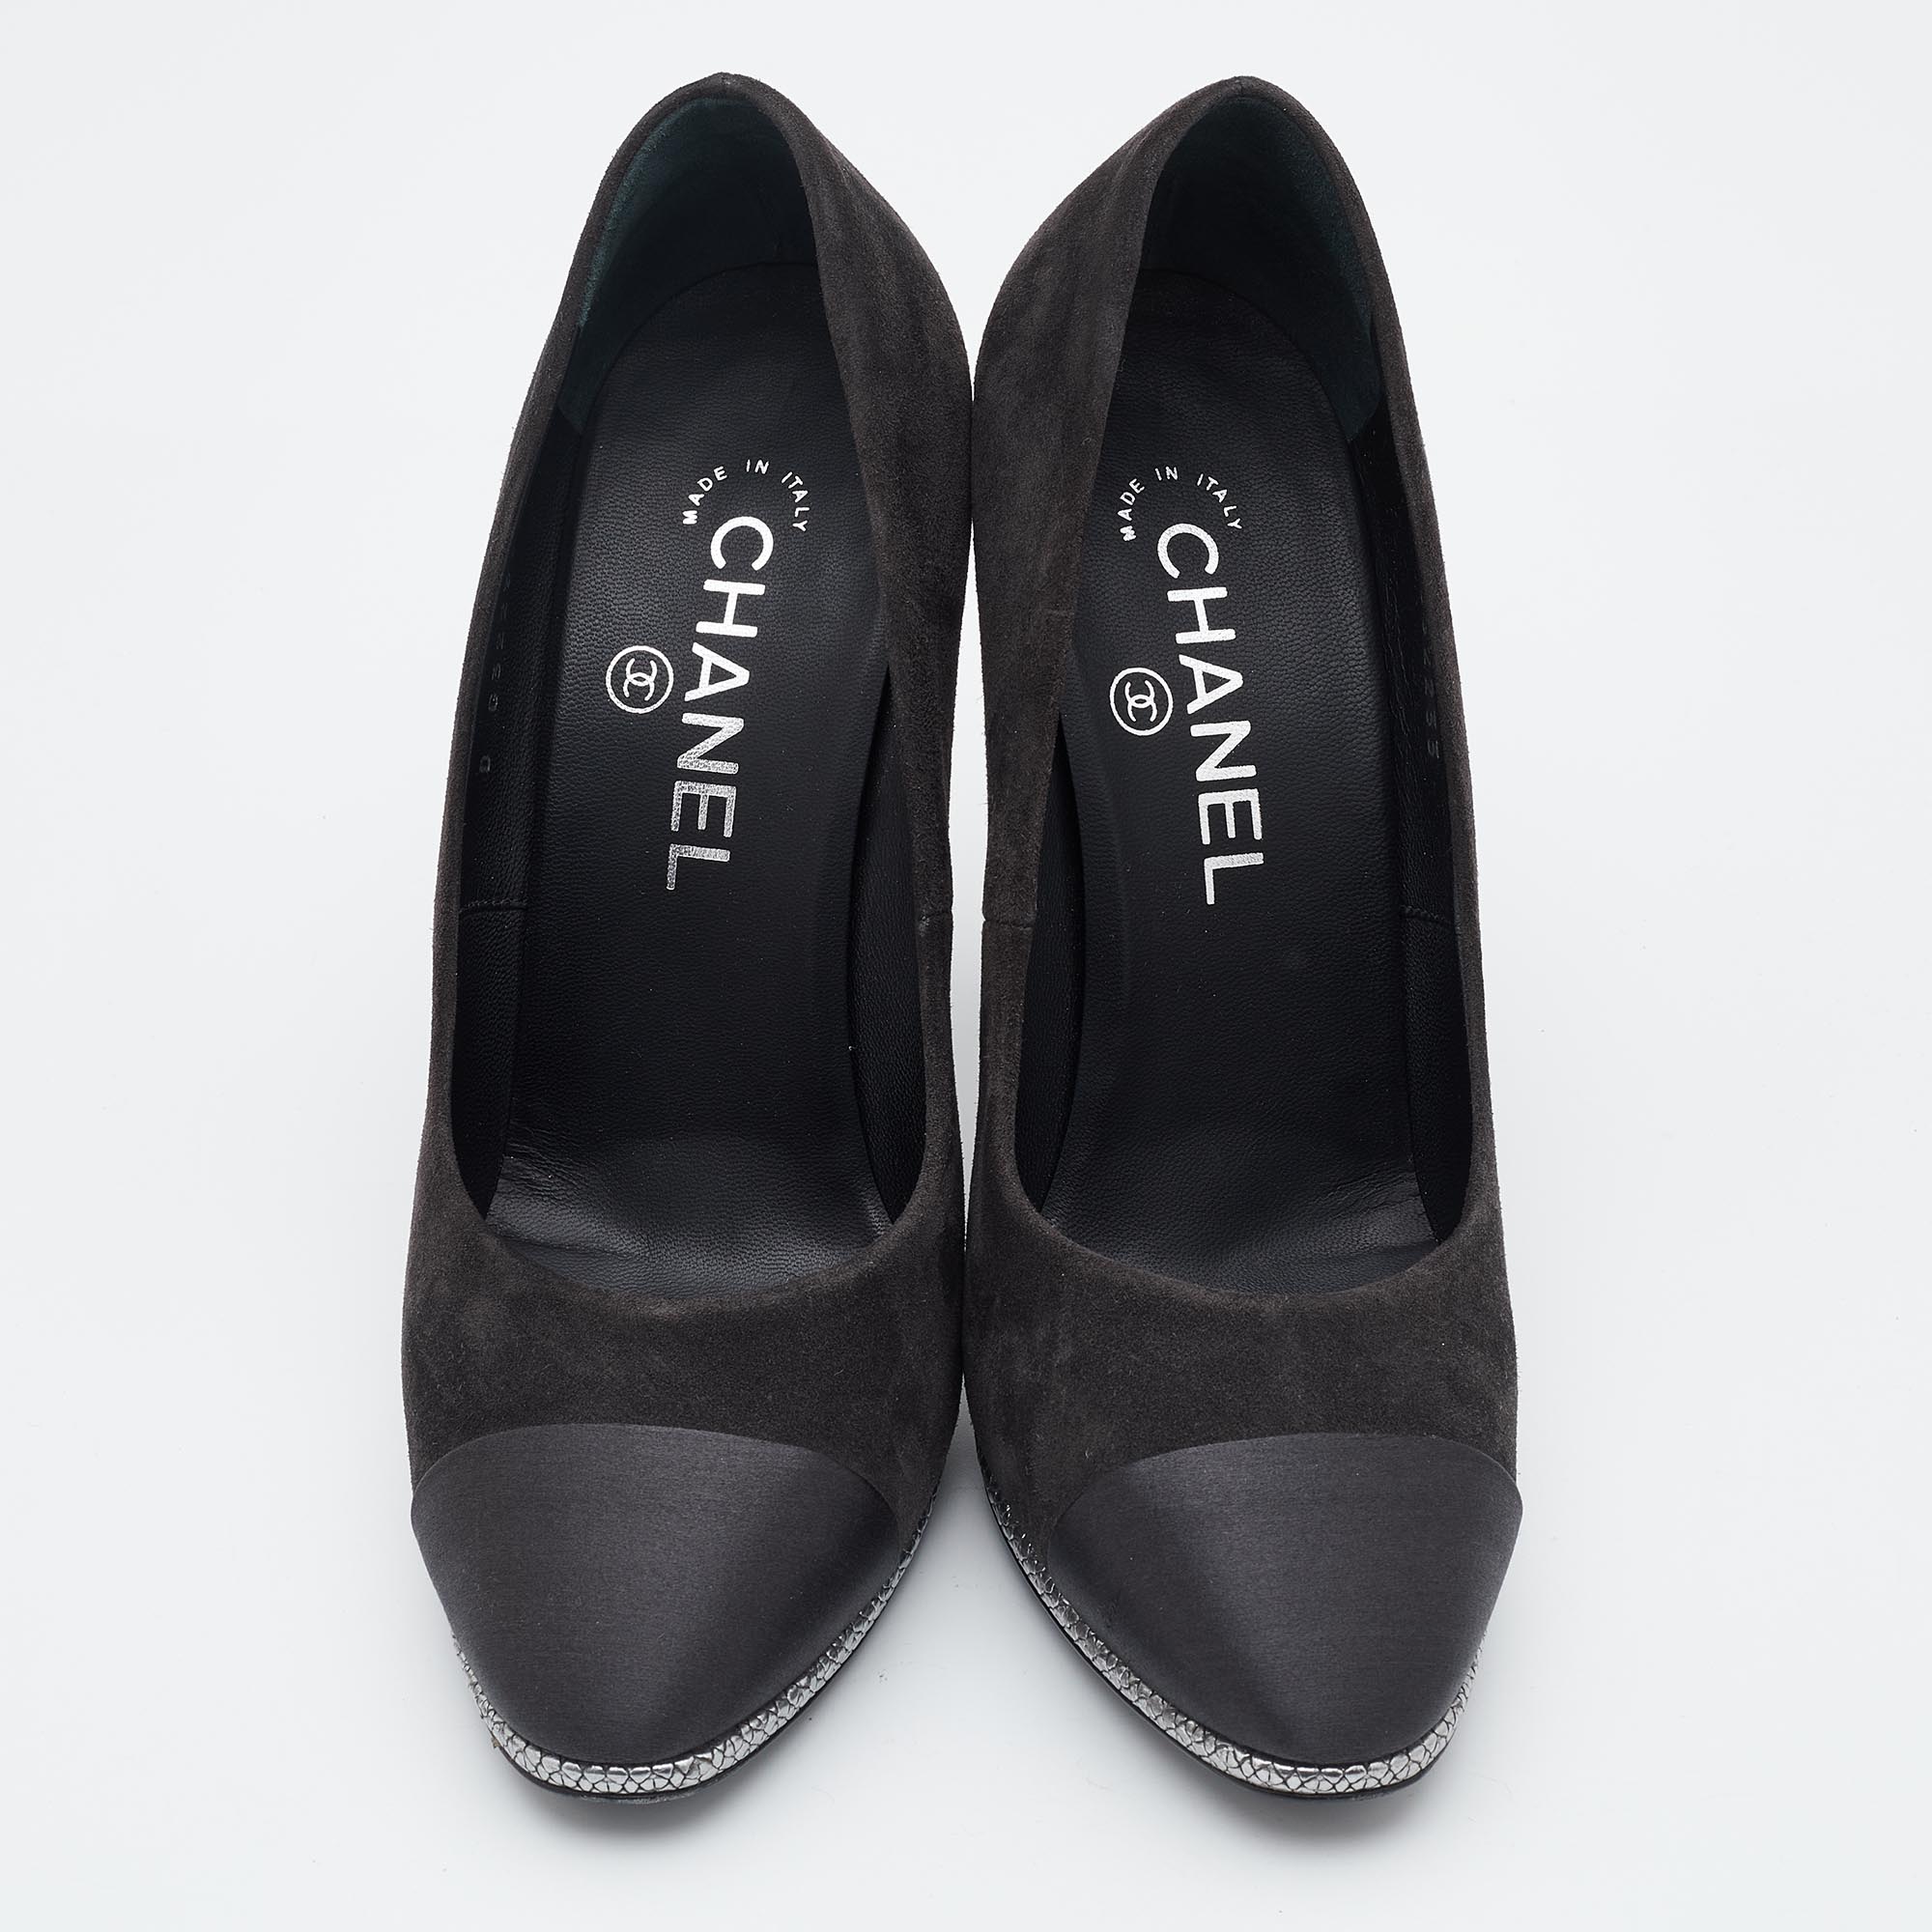 Chanel Black Suede And Satin Cap Toe CC Pumps Size 37.5